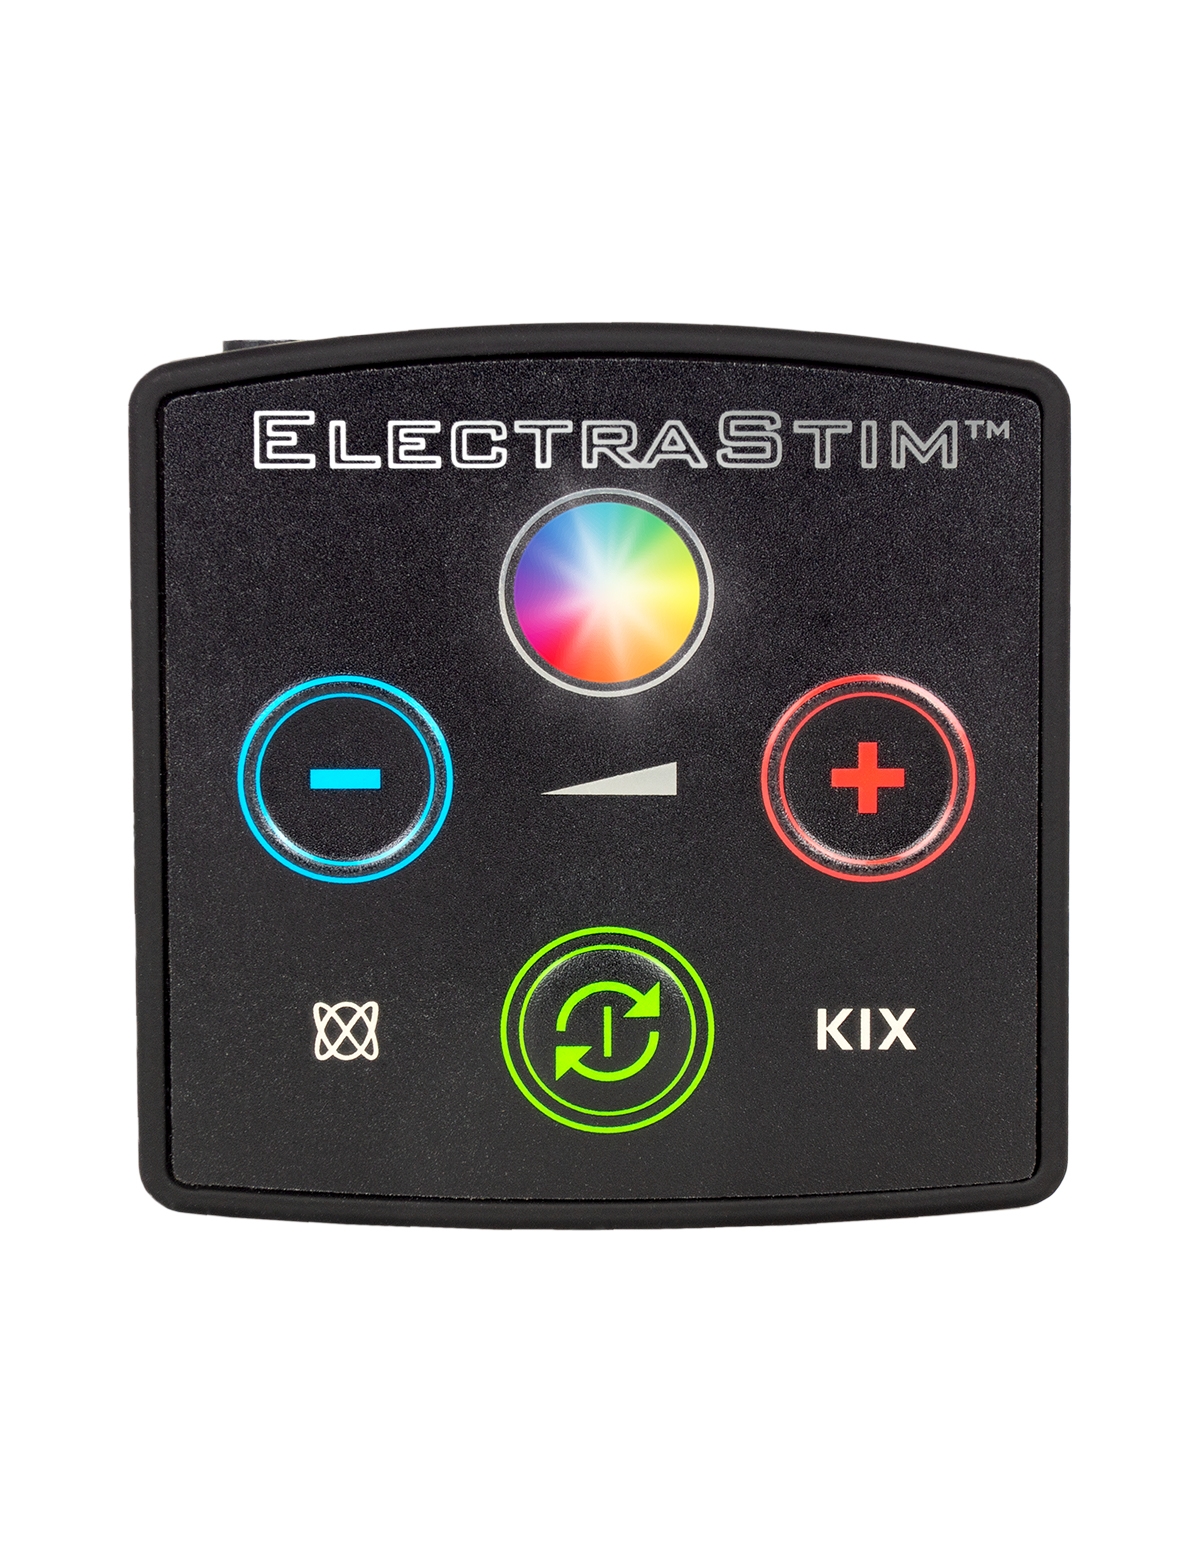 Electrastim Kix Electro Sex Stimulator Intro Unit photo picture